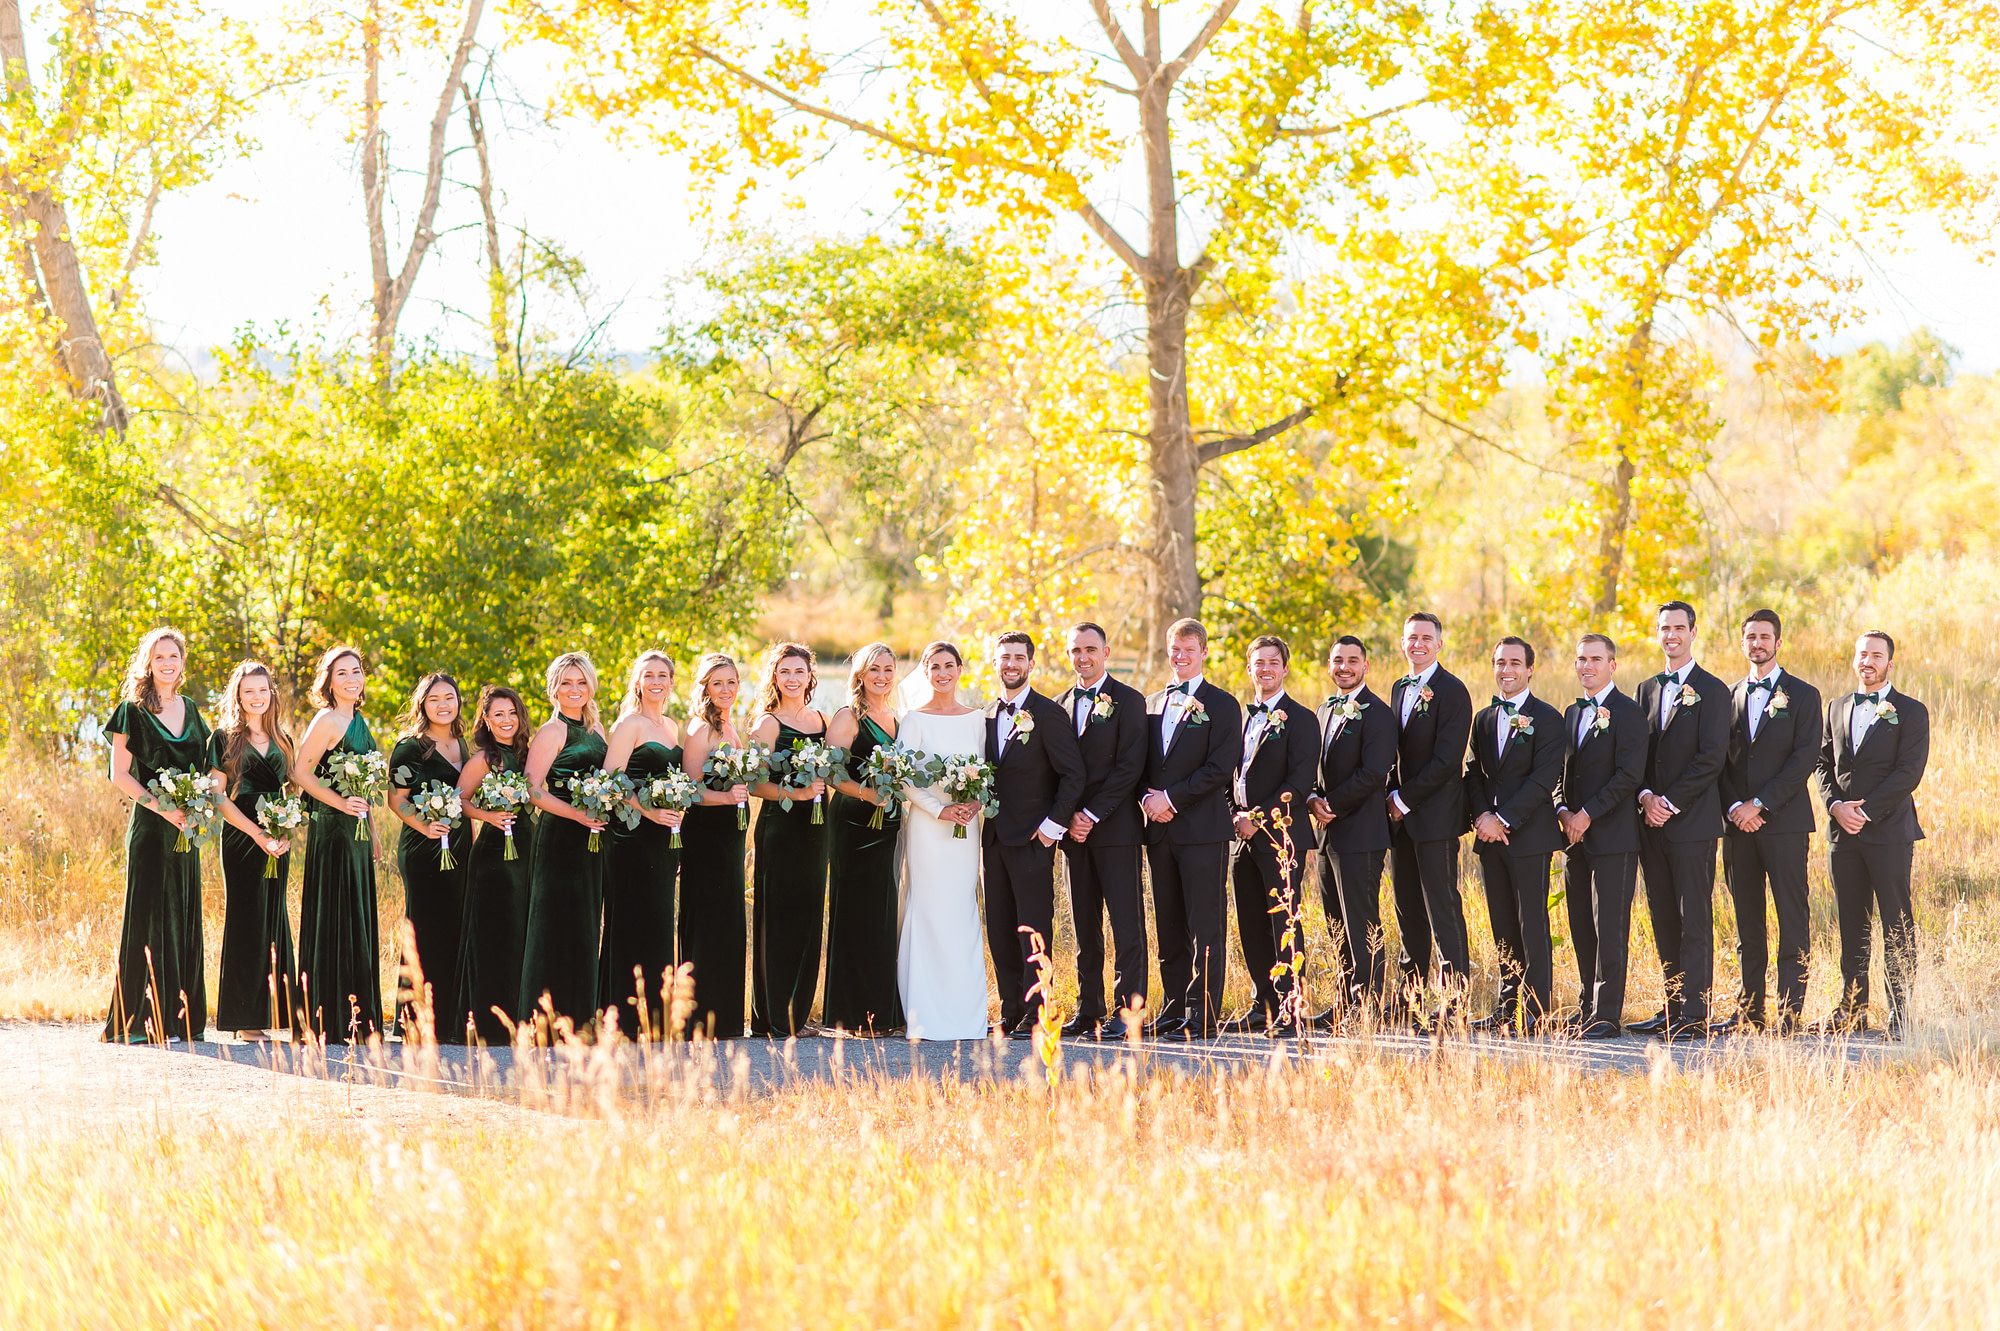 Bridal party, bride and groom pose for wedding portrait photos at Belmar Park in Lakewood, Colorado.